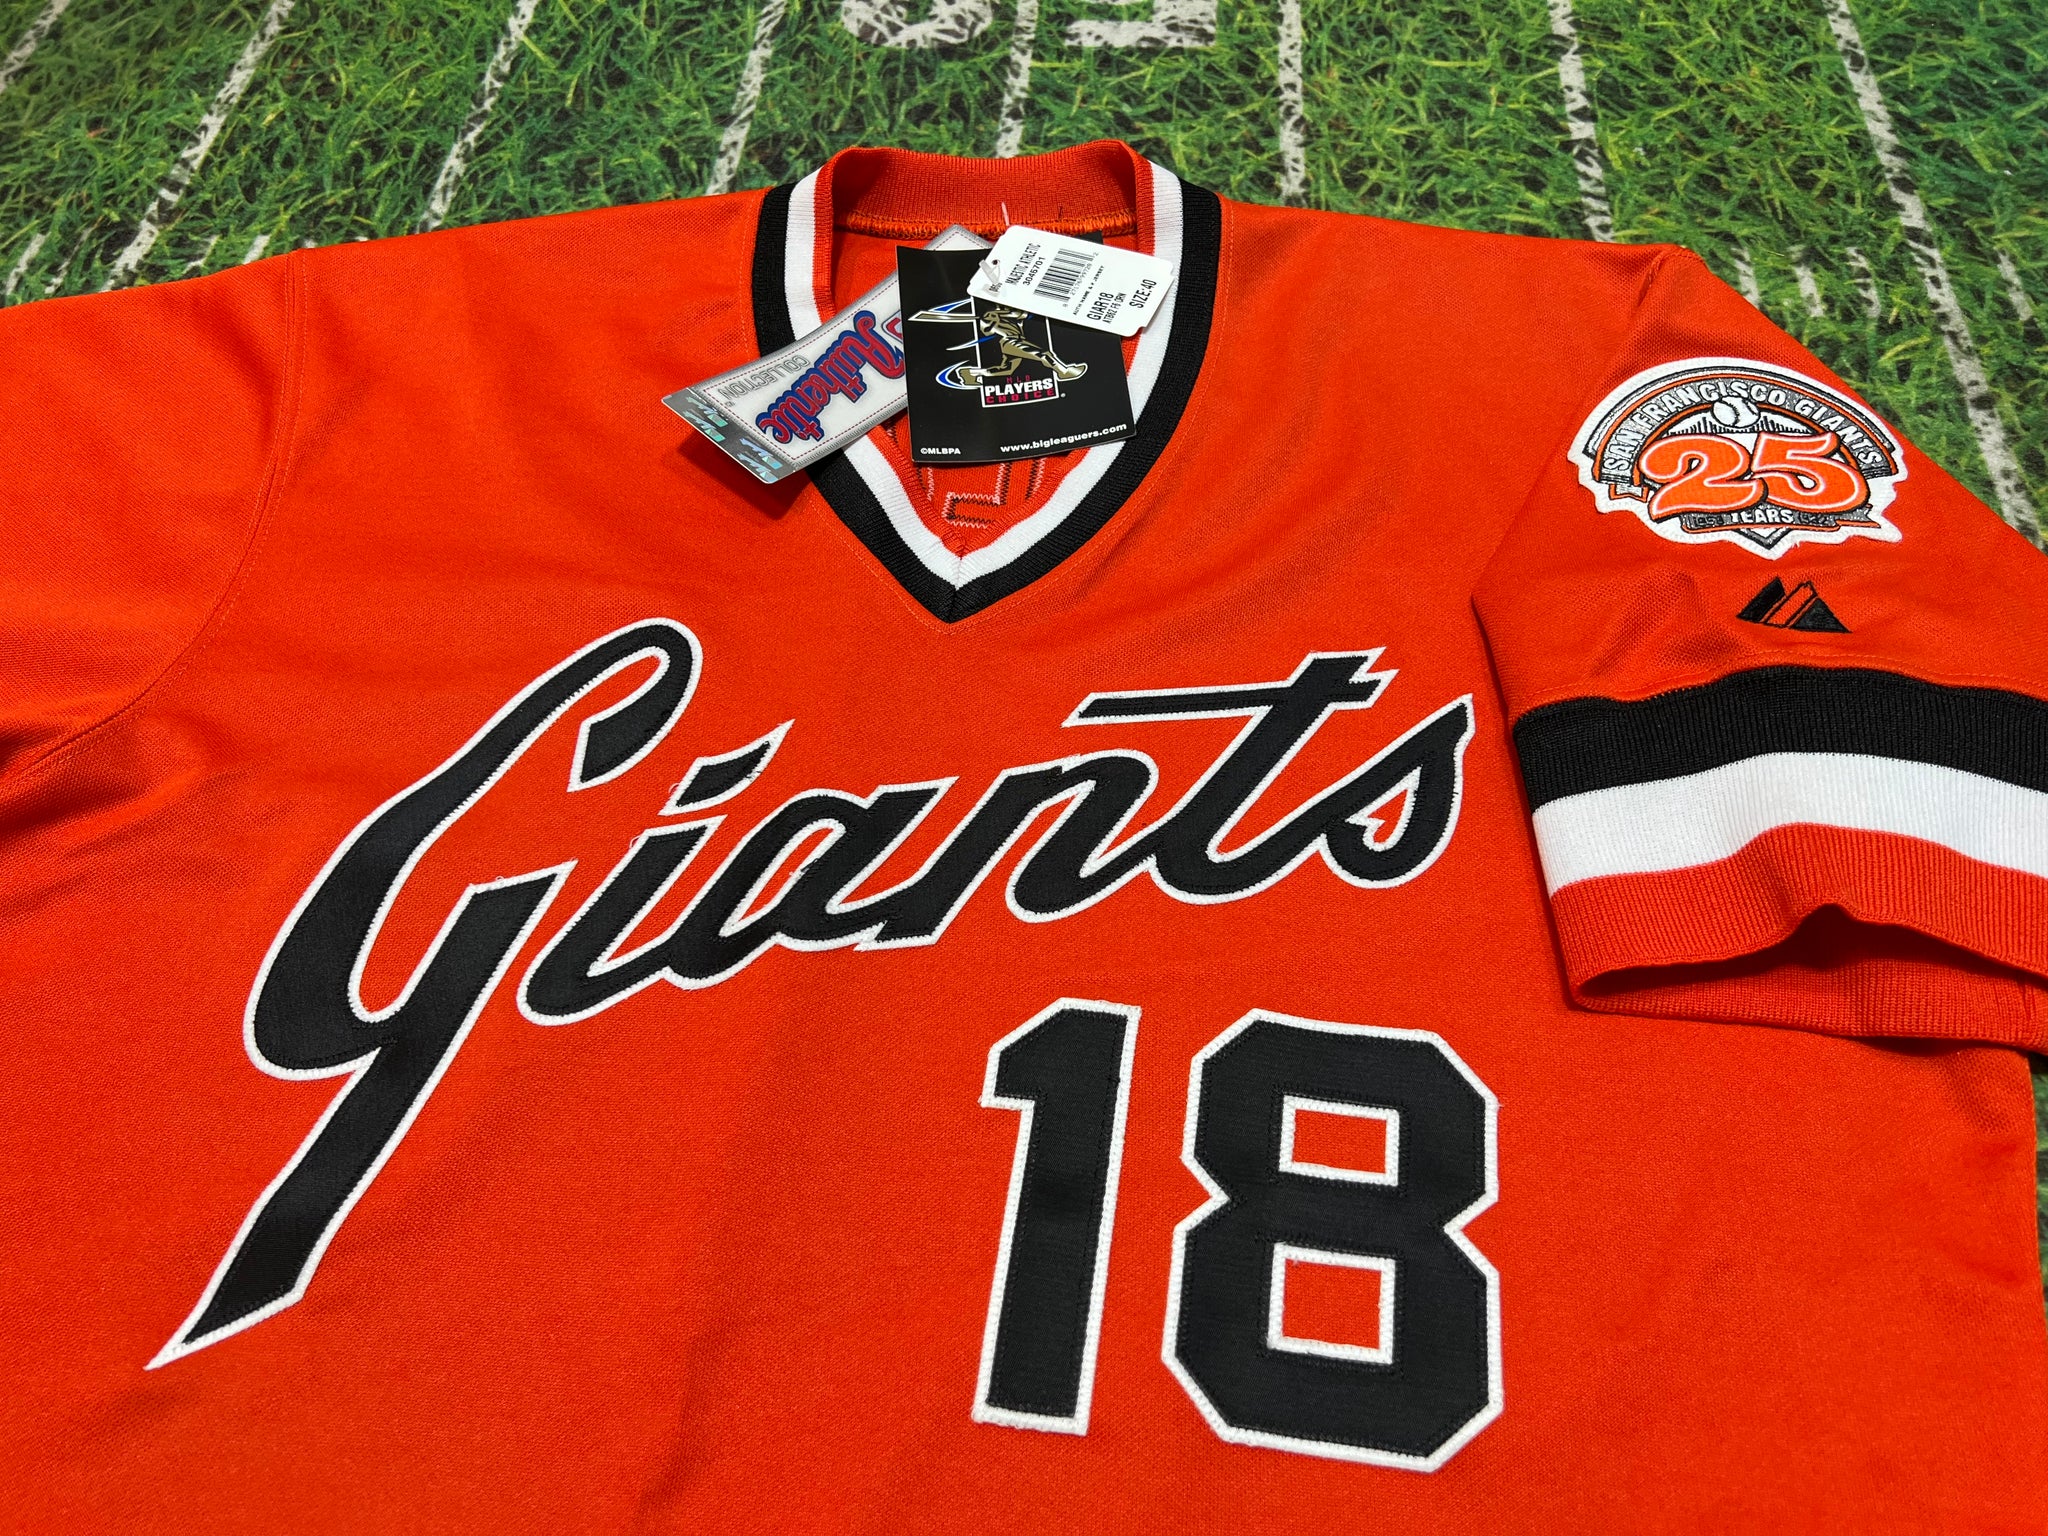 S.F. Giants throw back uniforms  Sf giants, Giants, San francisco